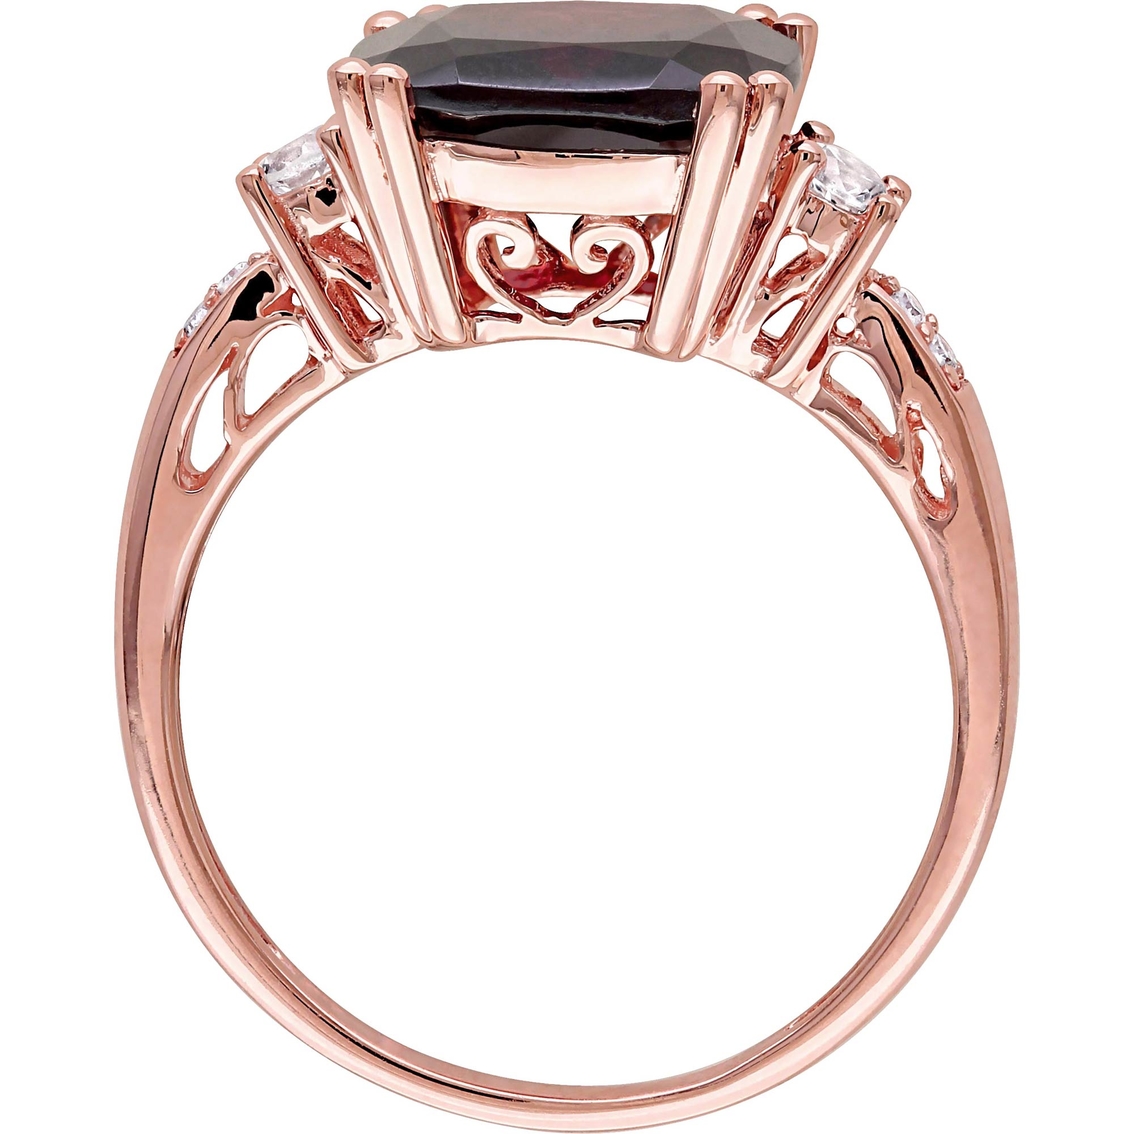 Sofia B. Cushion Cut Garnet Created White Sapphire and Diamond Accent Ring - Image 3 of 4